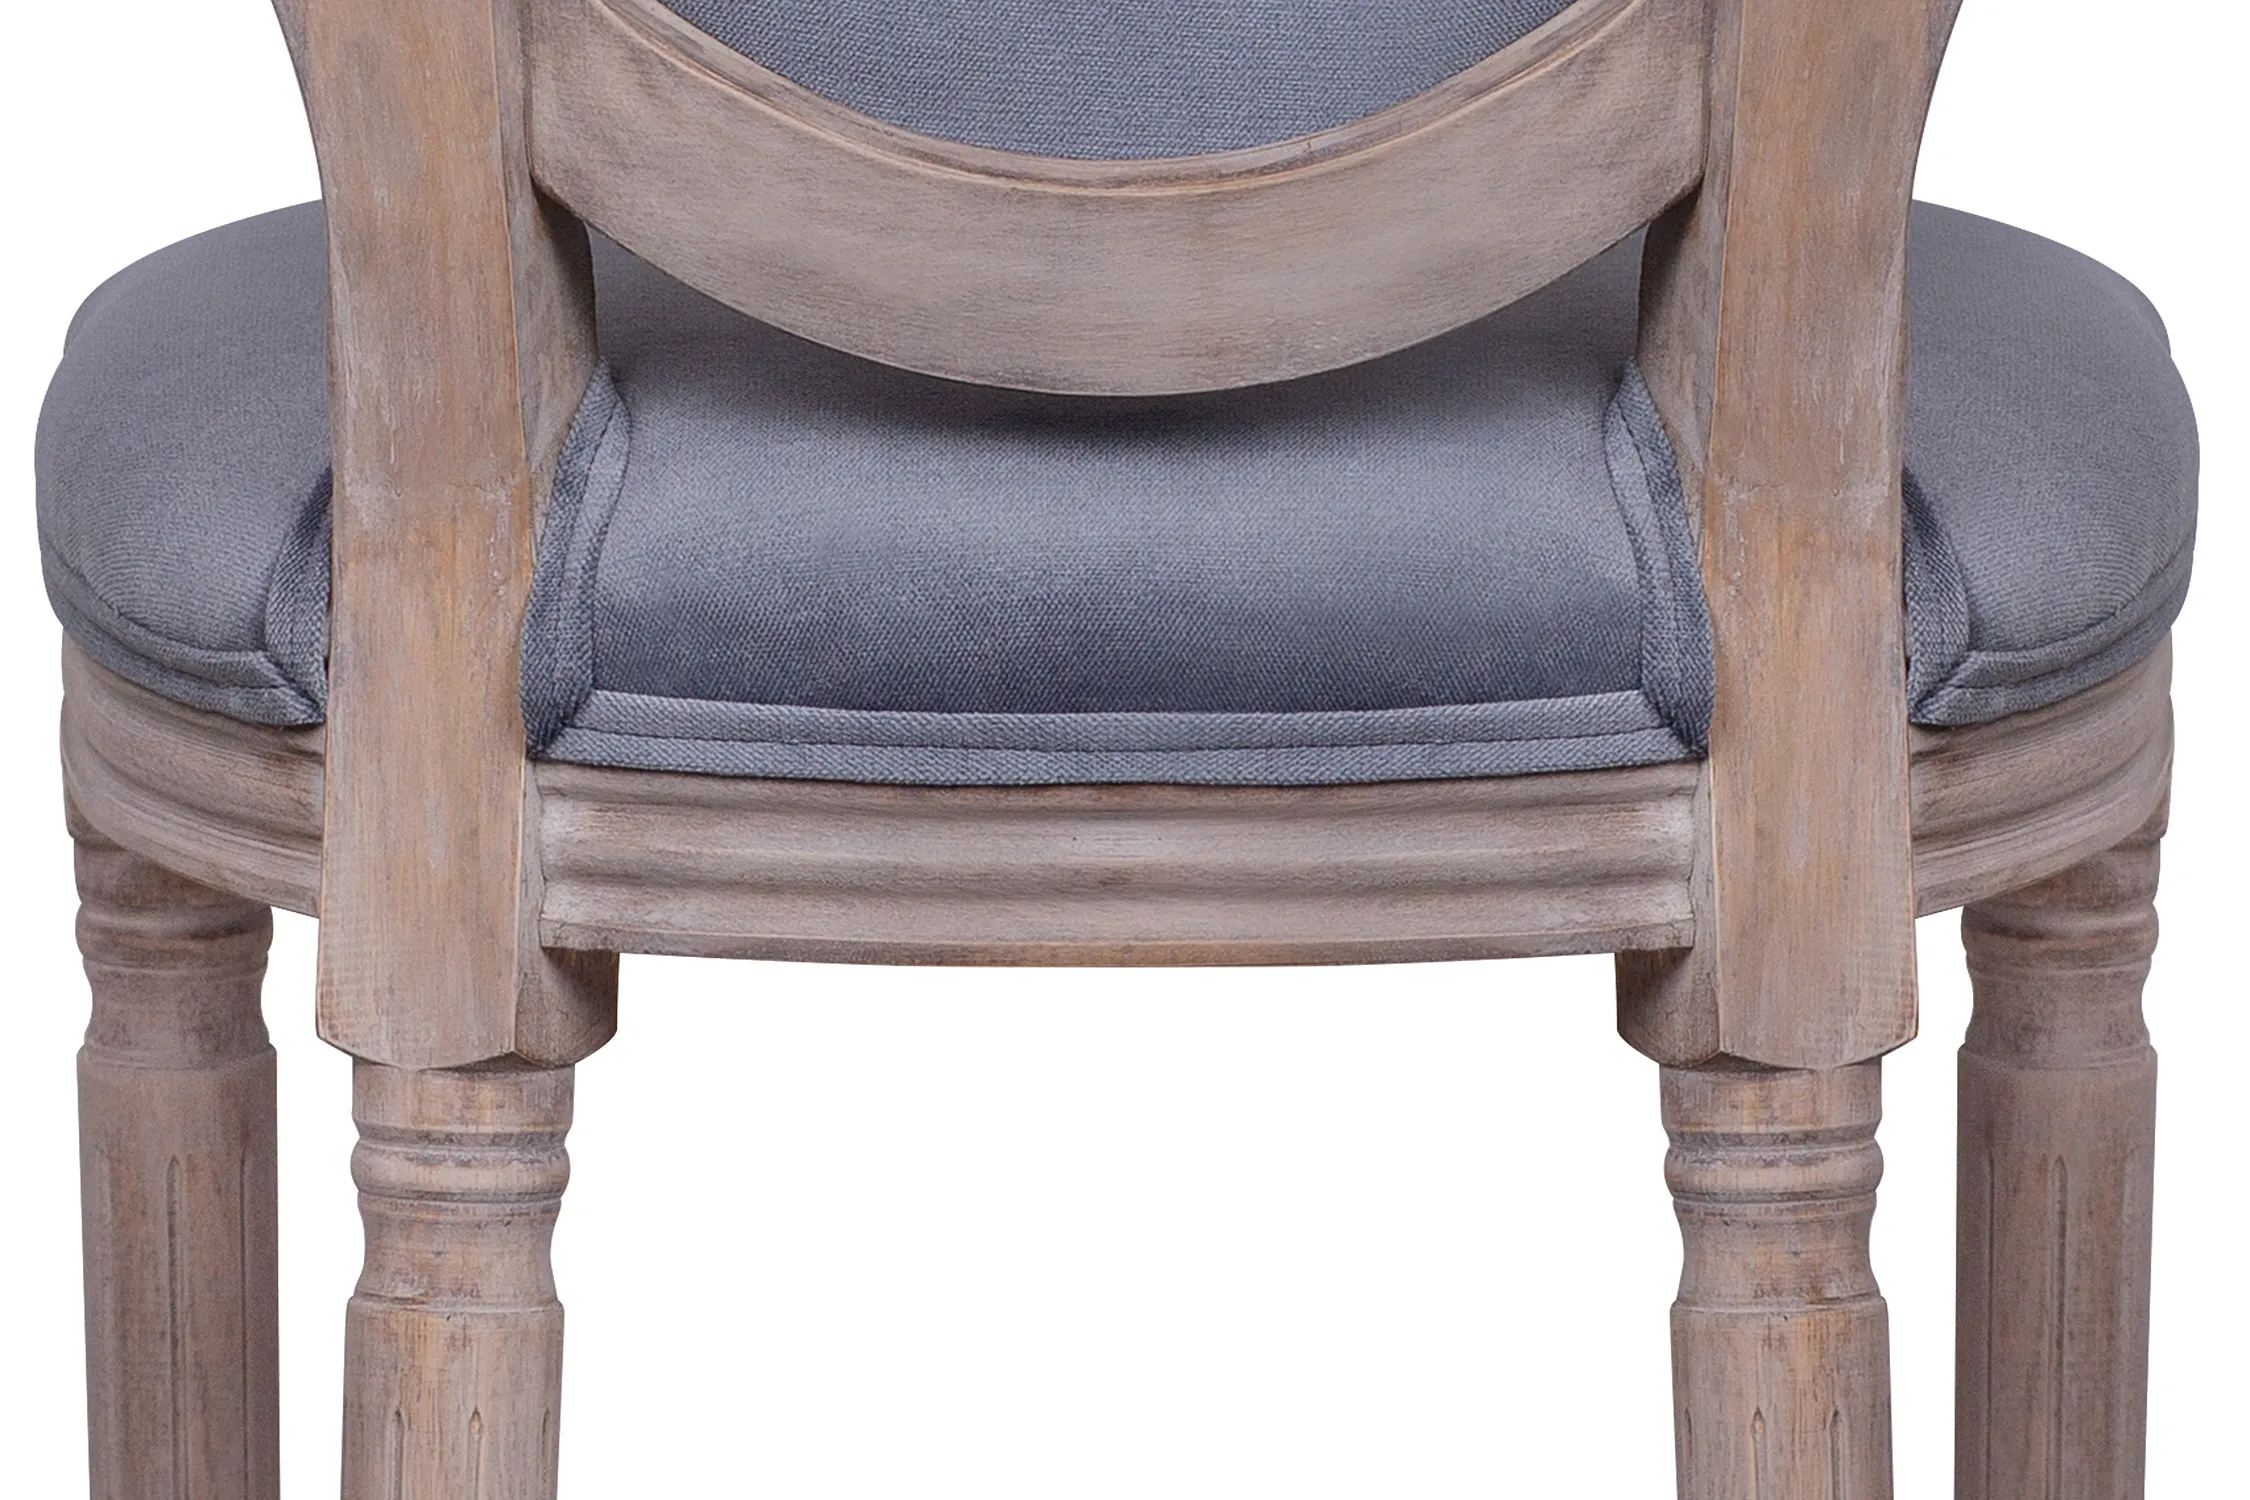 Барный стул Filon vell grey